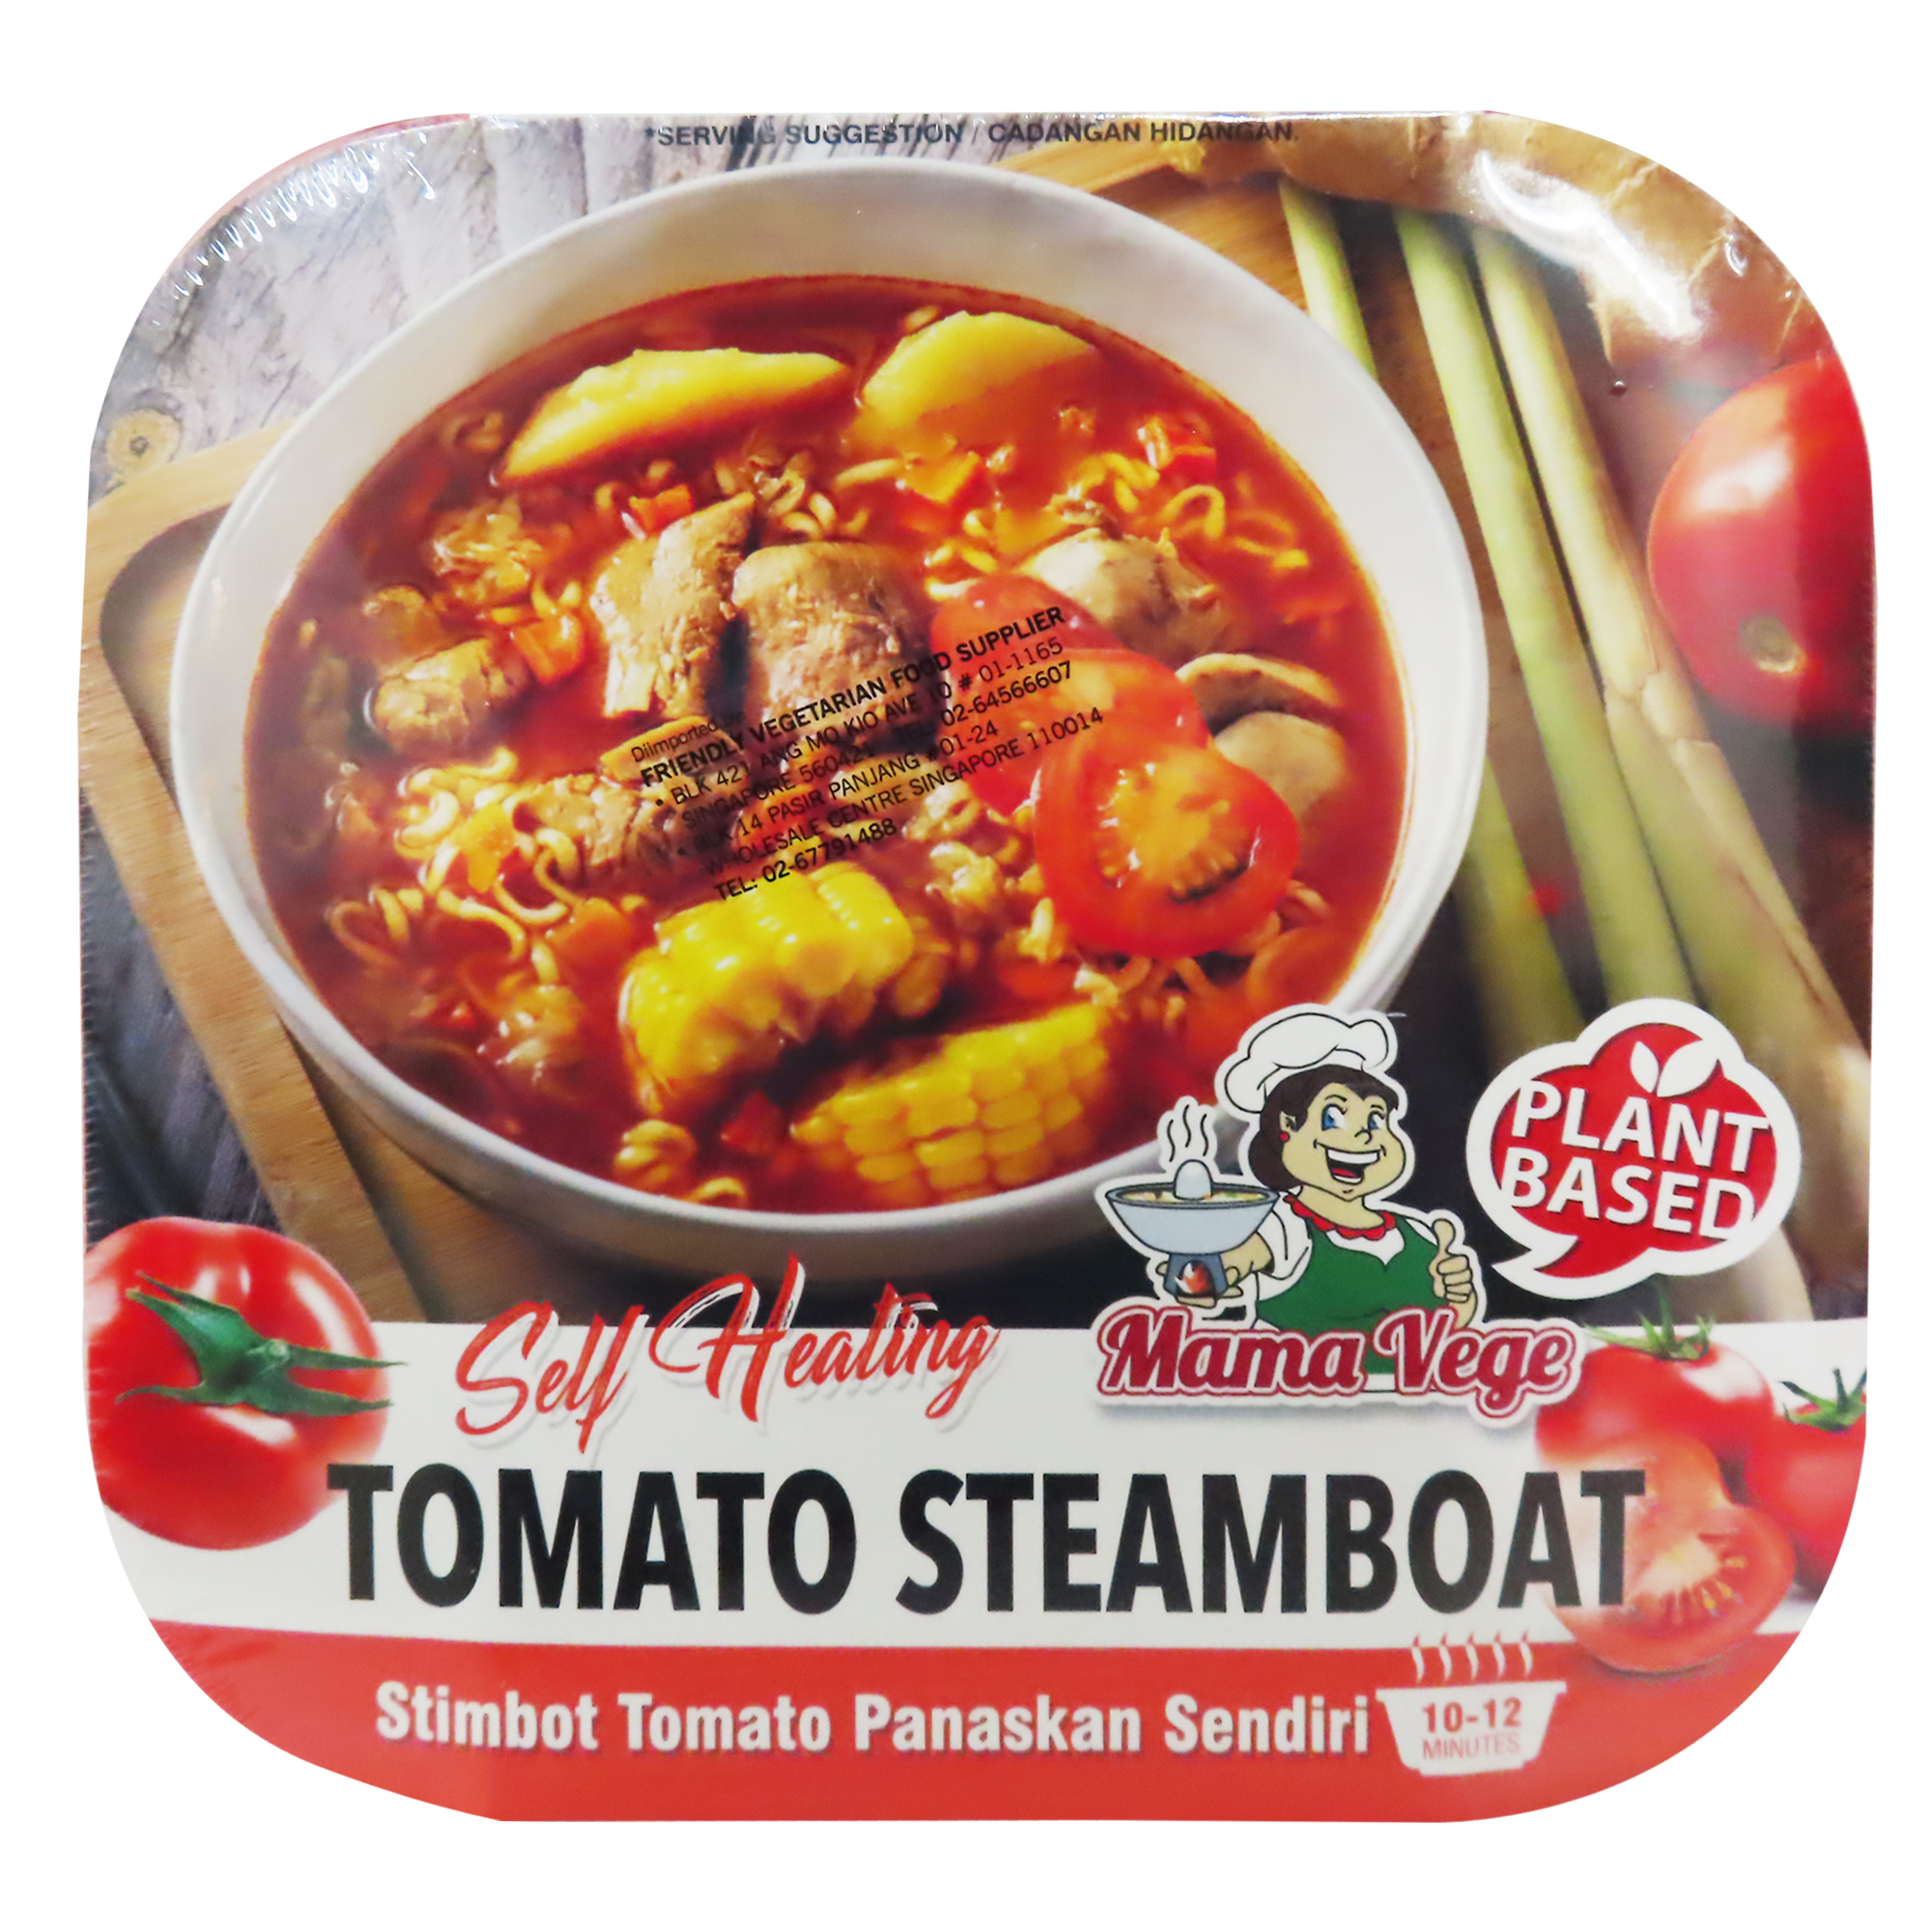 Image Tomato steamboat 懒人番茄火锅 340grams